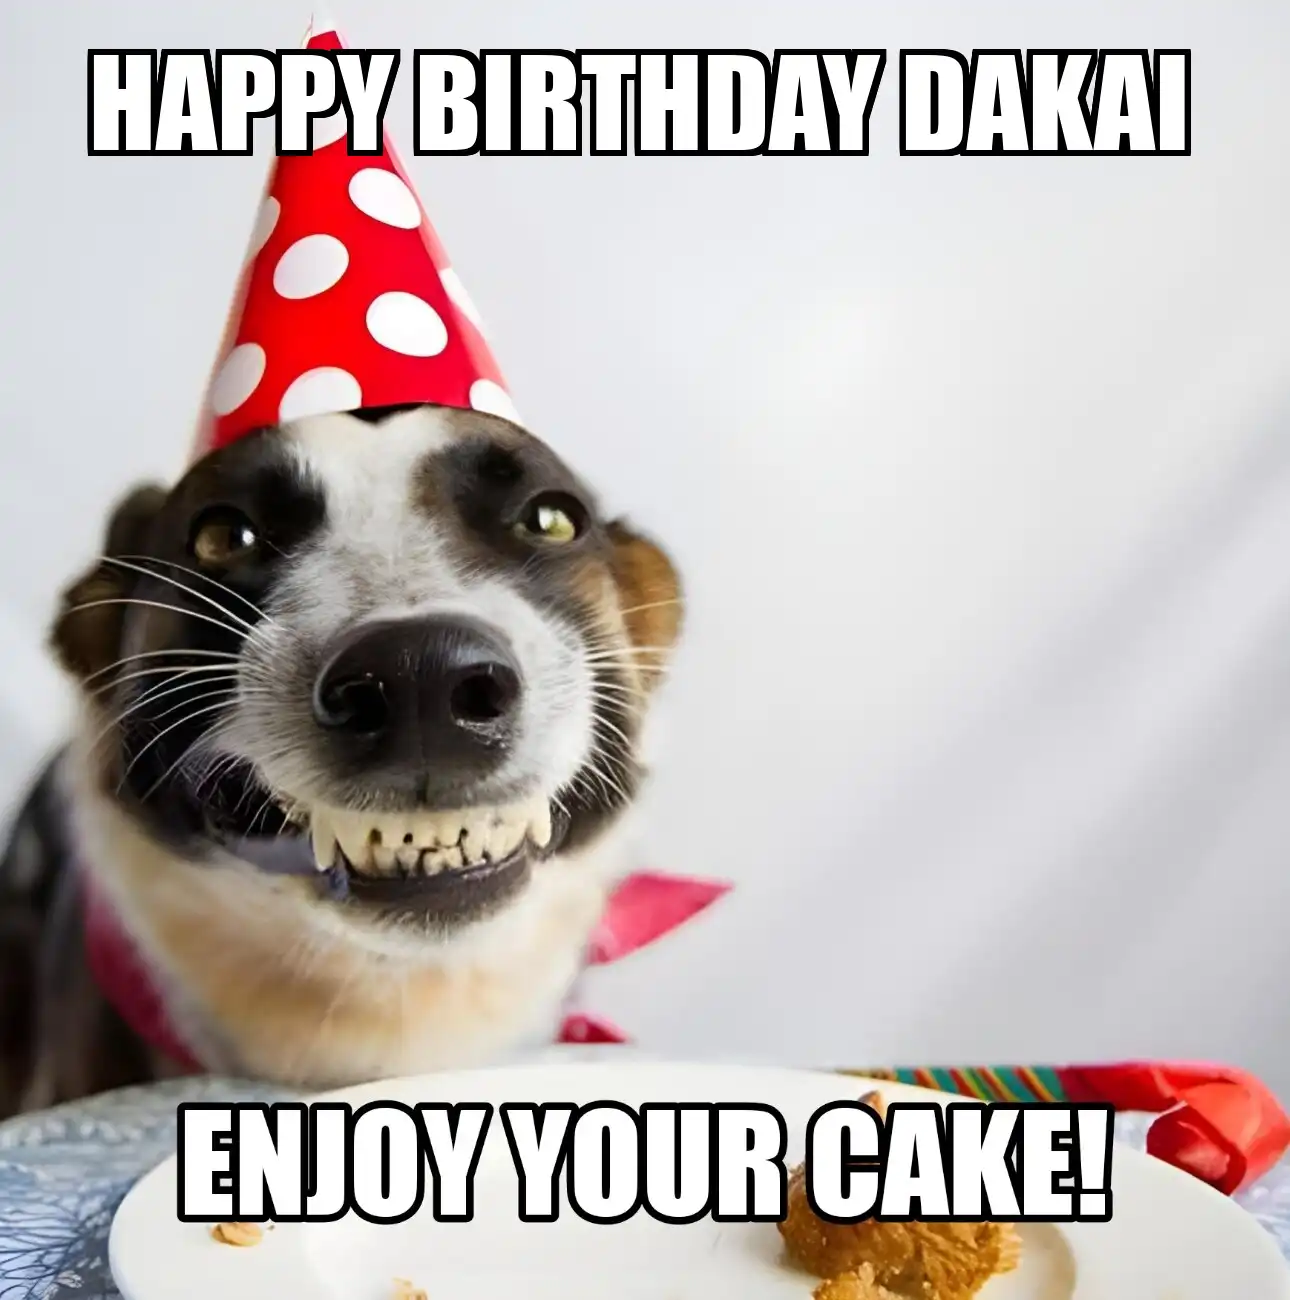 Happy Birthday Dakai Enjoy Your Cake Dog Meme